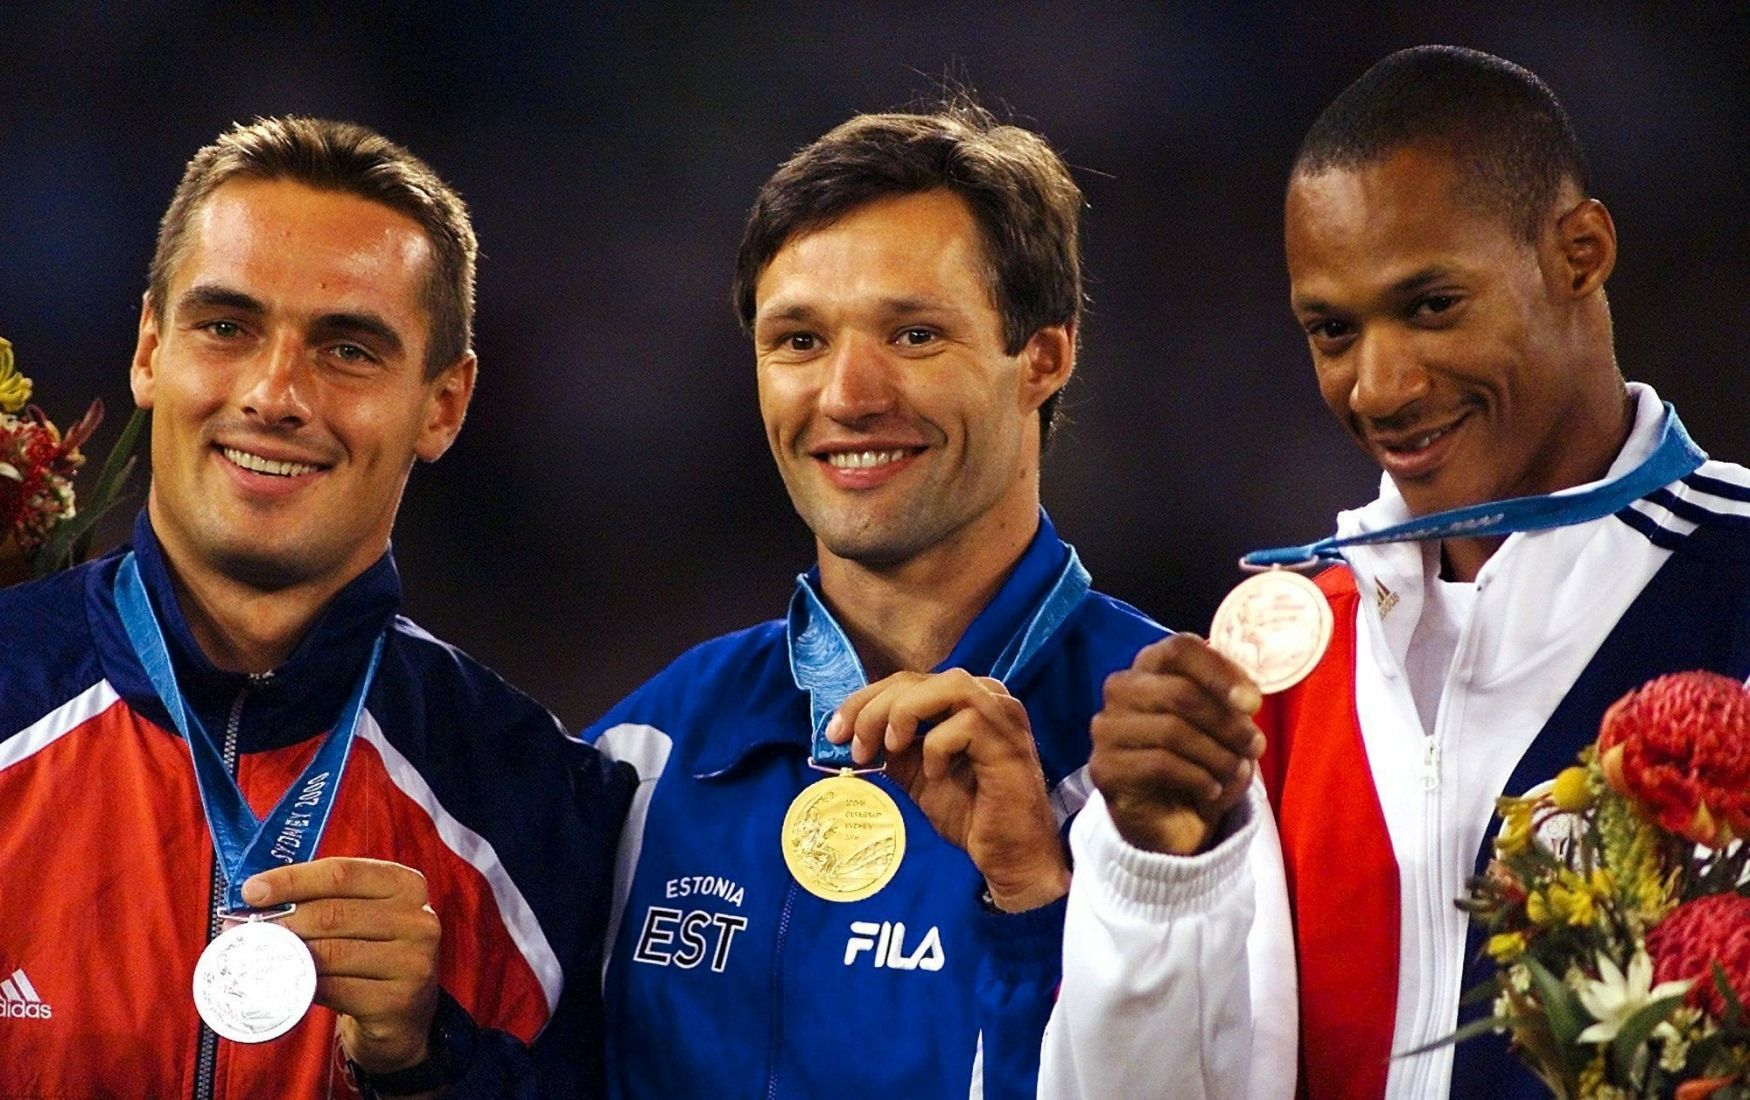 Medailisté v desetiboji na olympiádě 2000 v Sydney: zleva Roman Šebrle, Erki Nool a Chris Huffins